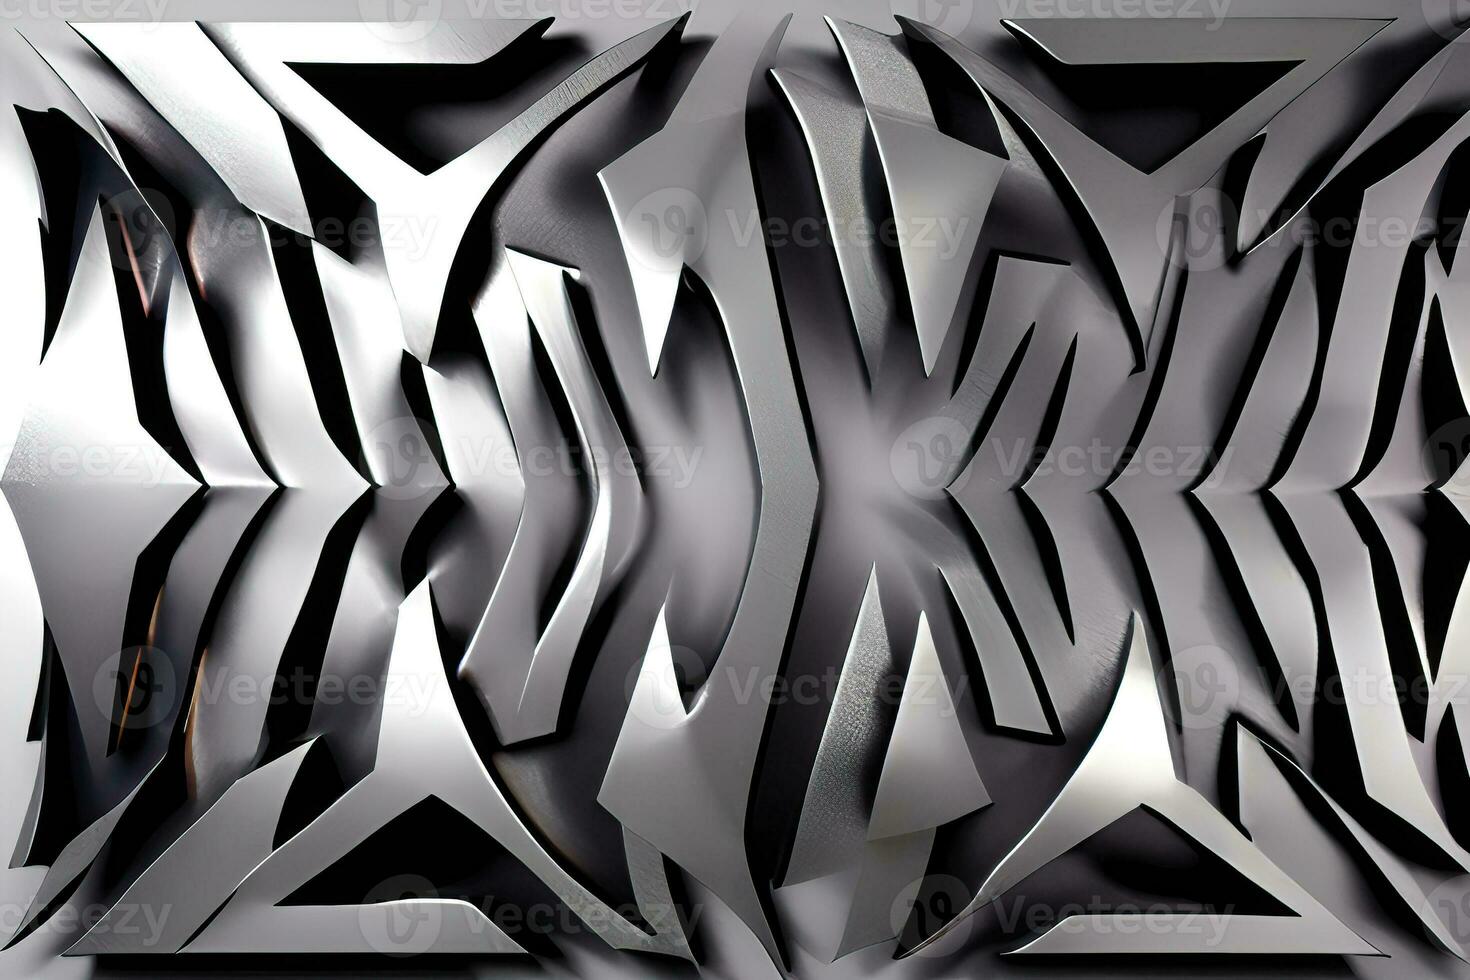 The Art of Geometry - A Futuristic Metallic Wallpaper photo